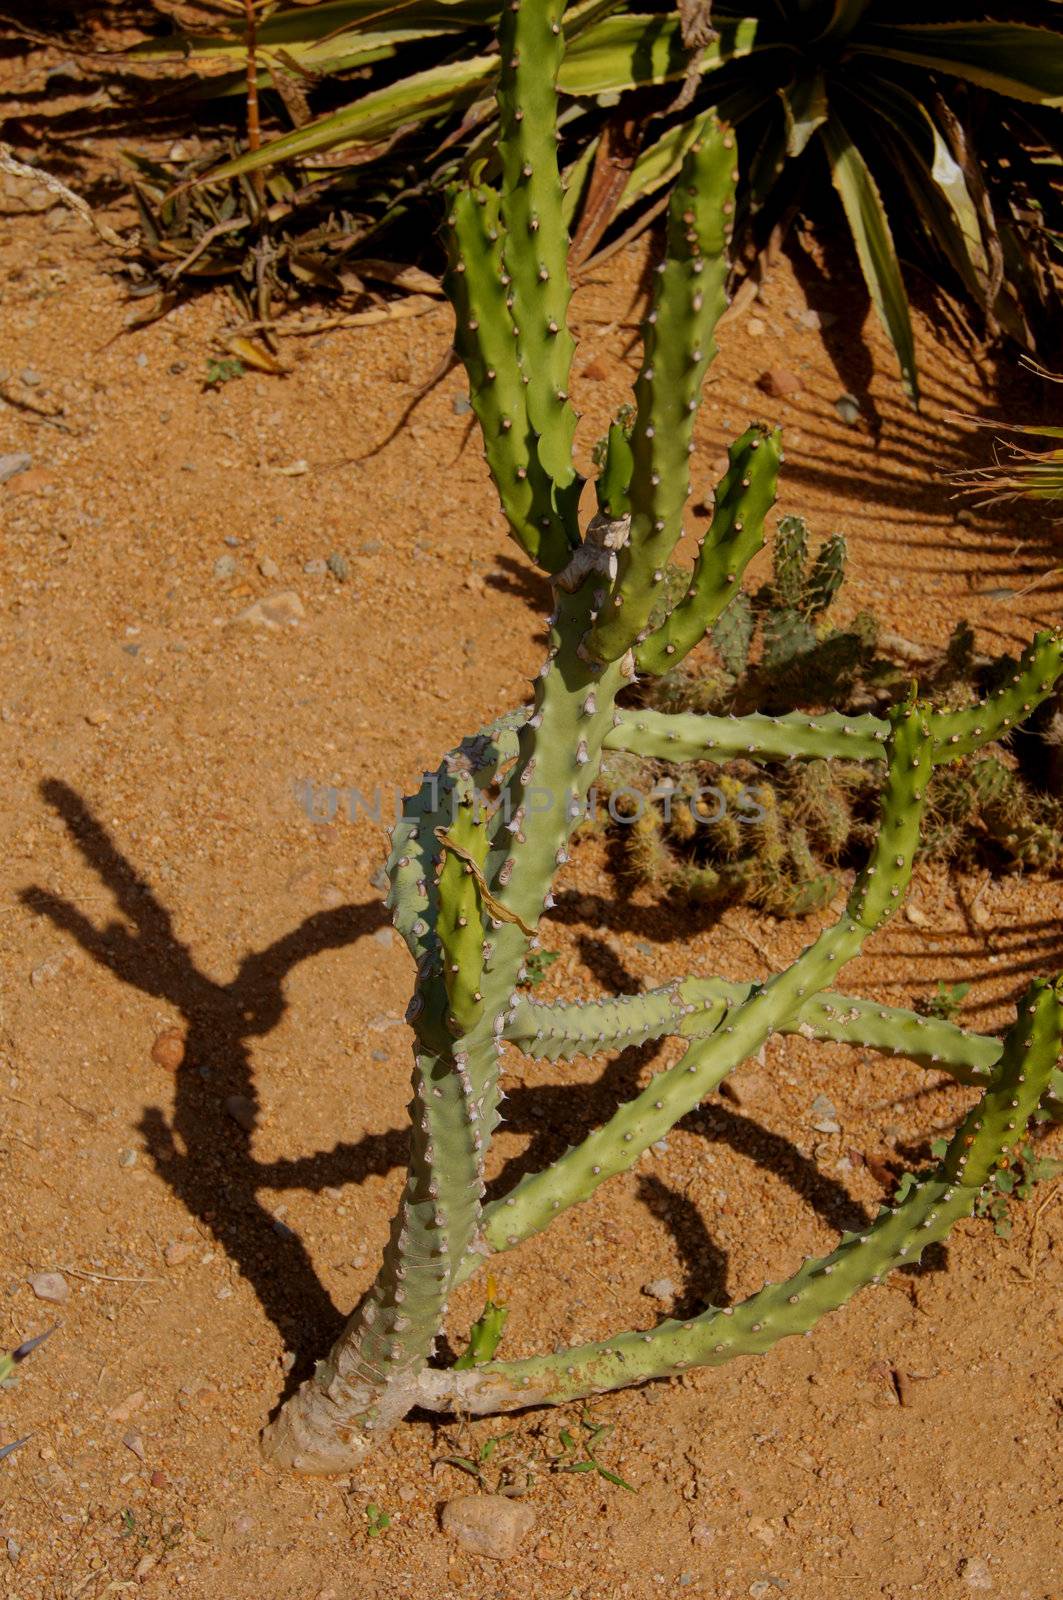 Cactus plant in the desert garden        